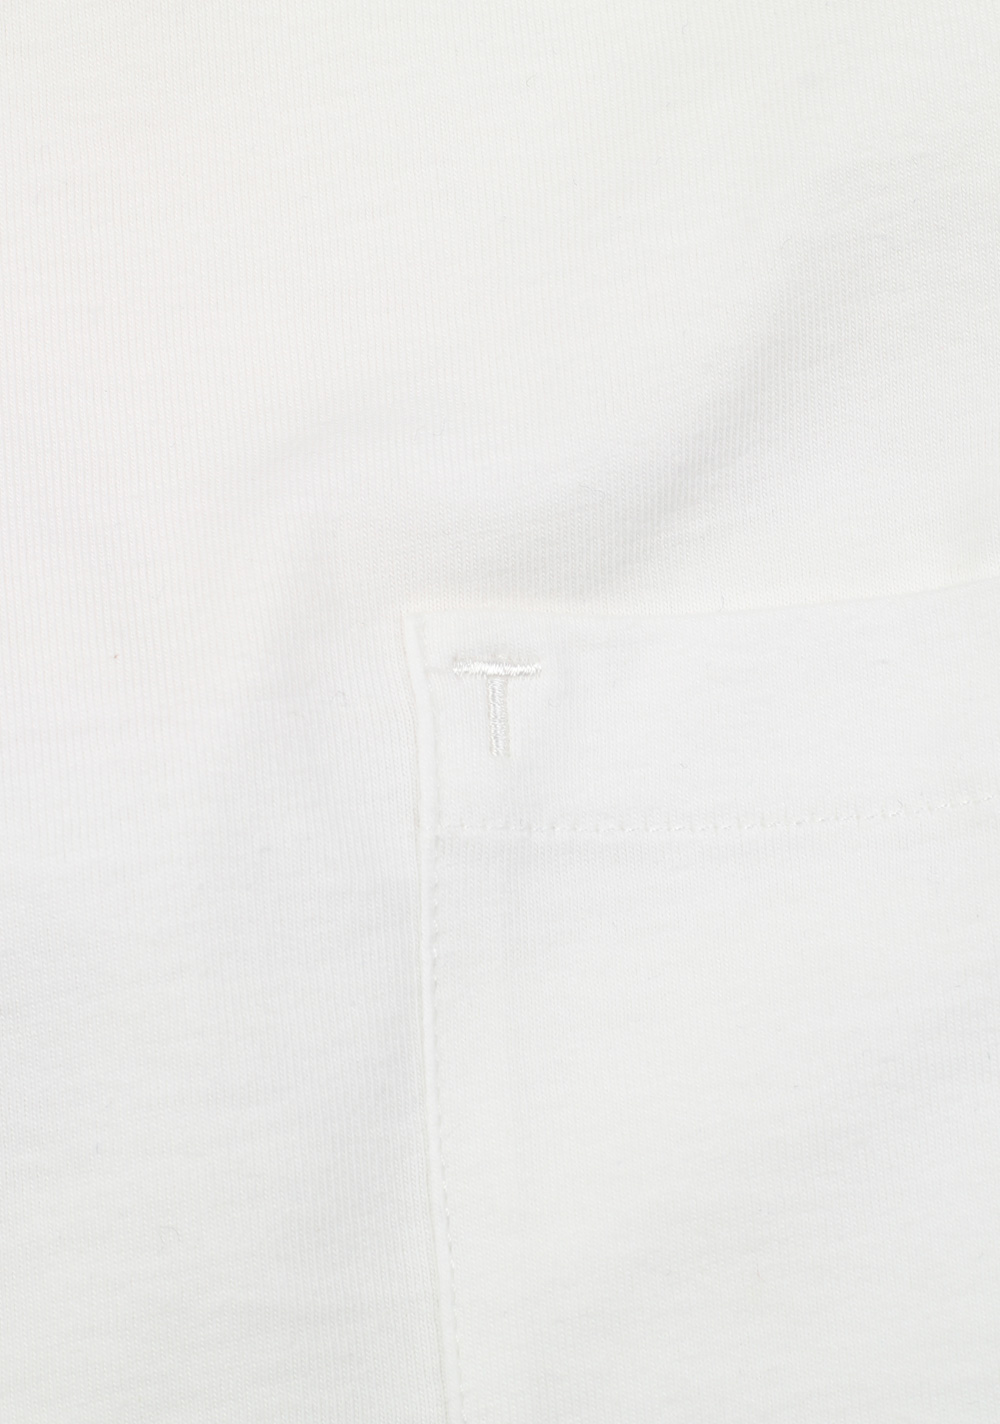 TOM FORD Crew Neck White Tee Shirt Size 52 / 42R U.S. | Costume Limité